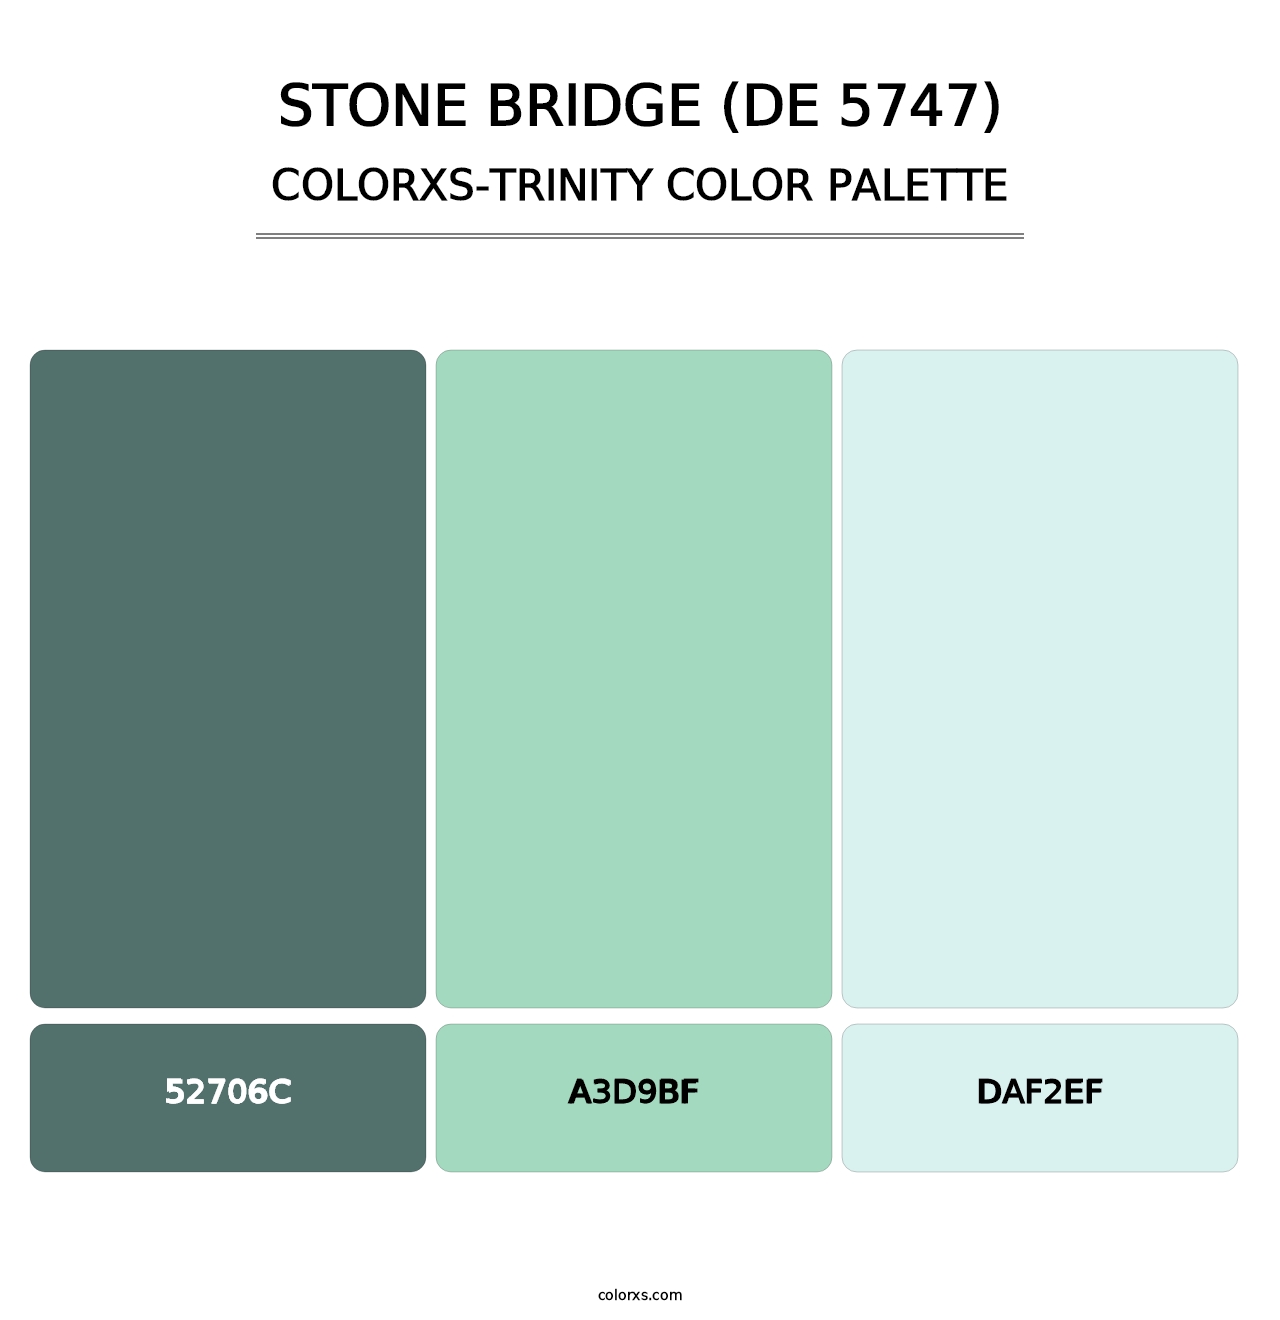 Stone Bridge (DE 5747) - Colorxs Trinity Palette